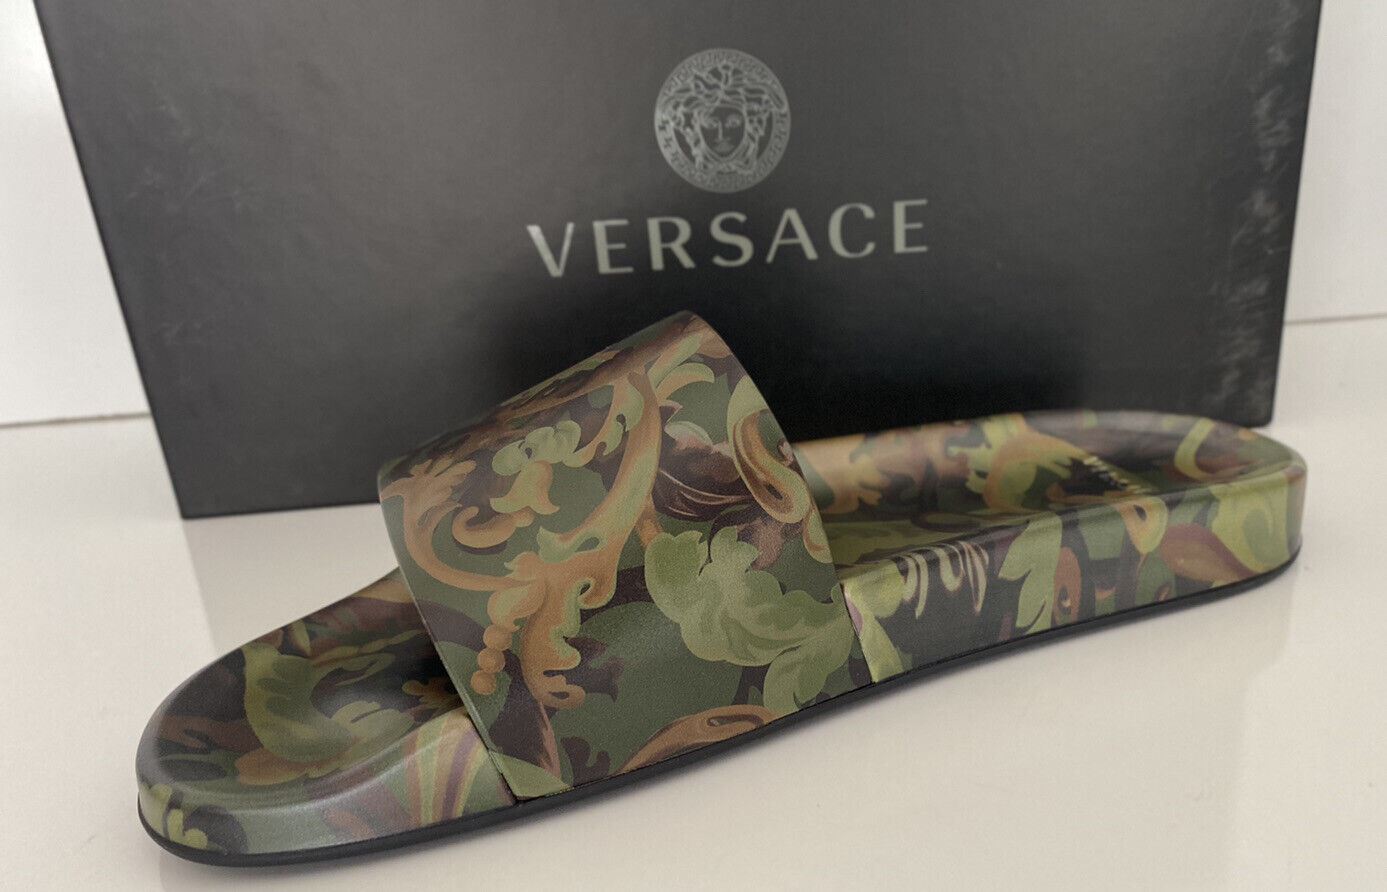 NIB $395 Versace Baroccoflage Slides Sandalen Khaki 8 US (41 Euro) IT DSU6516 